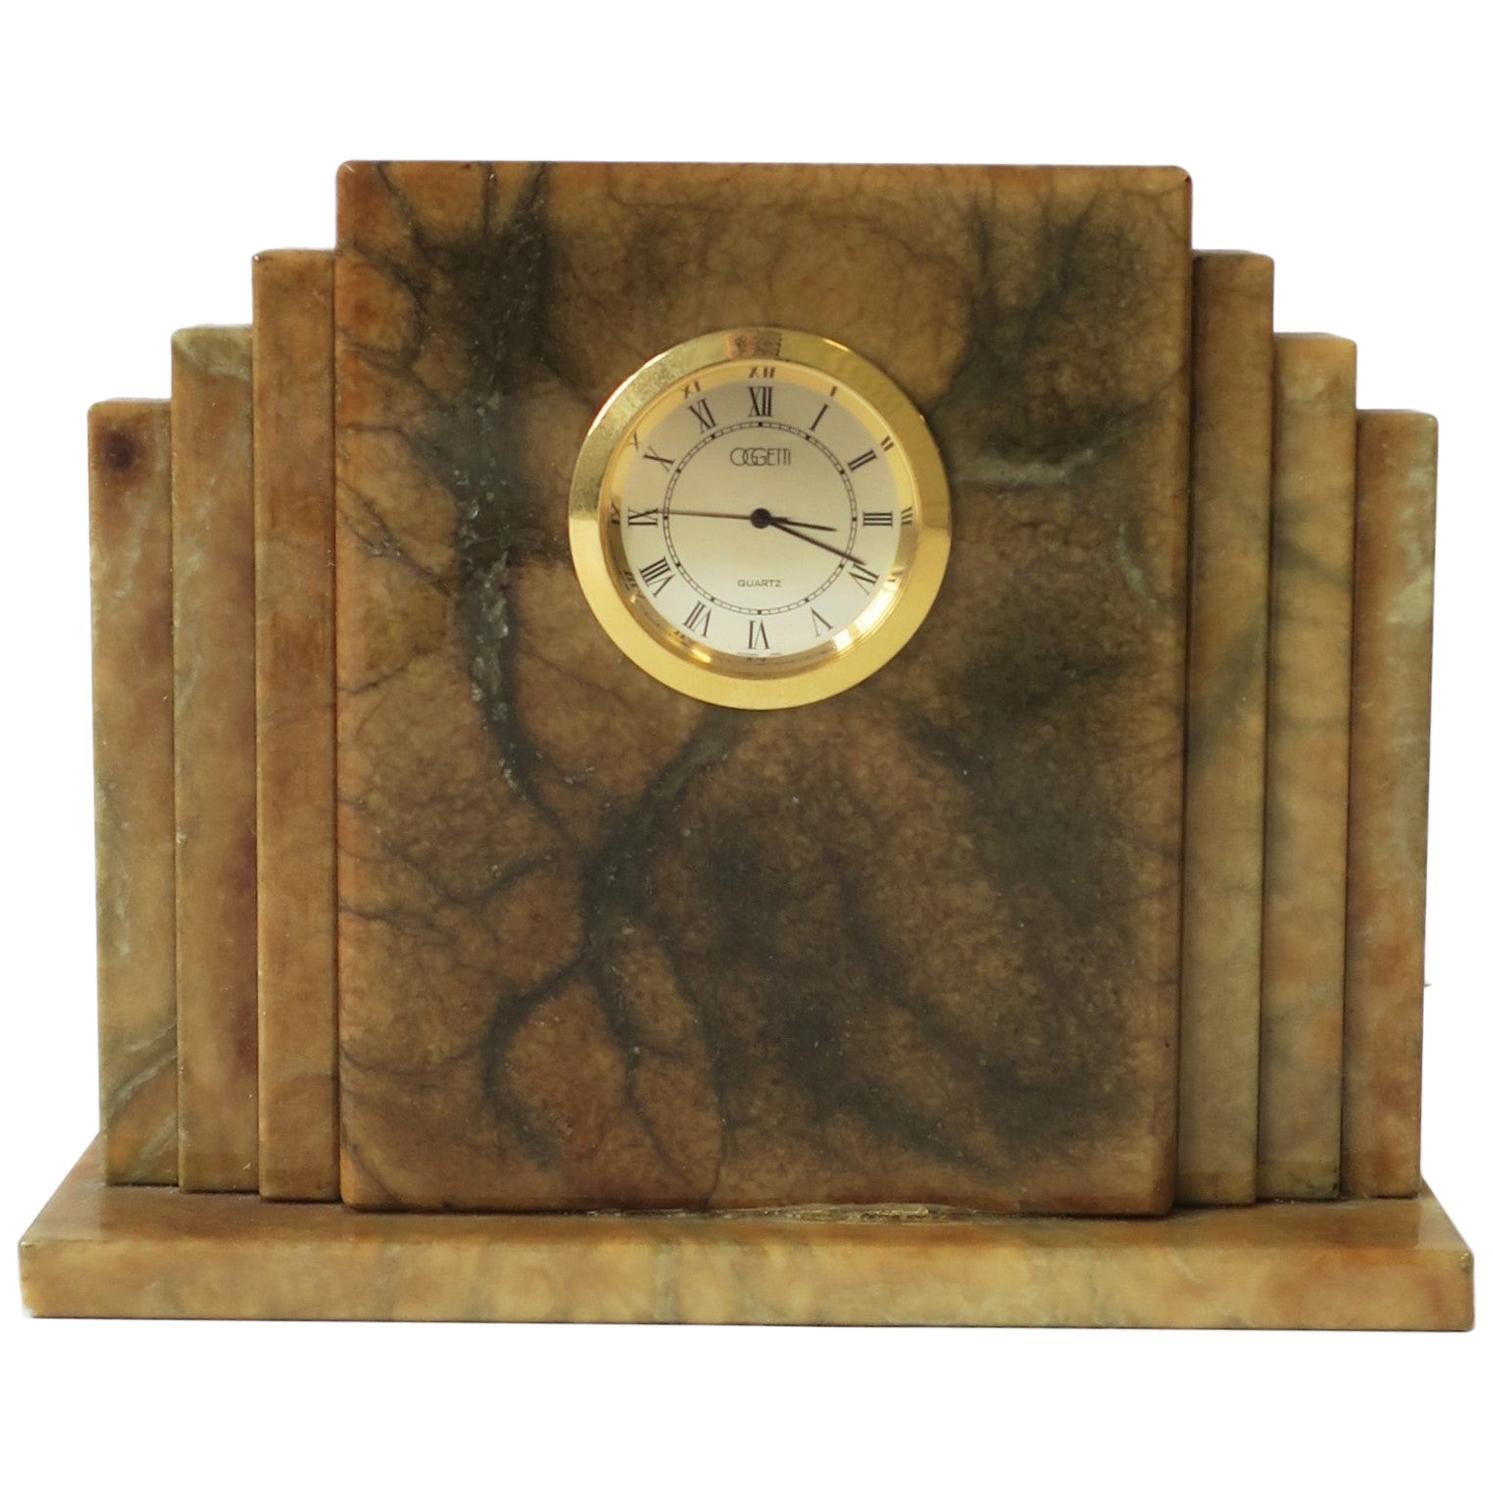 Italian Alabaster Marble Art Deco Modern Mantel Clock by Oggetti For Sale